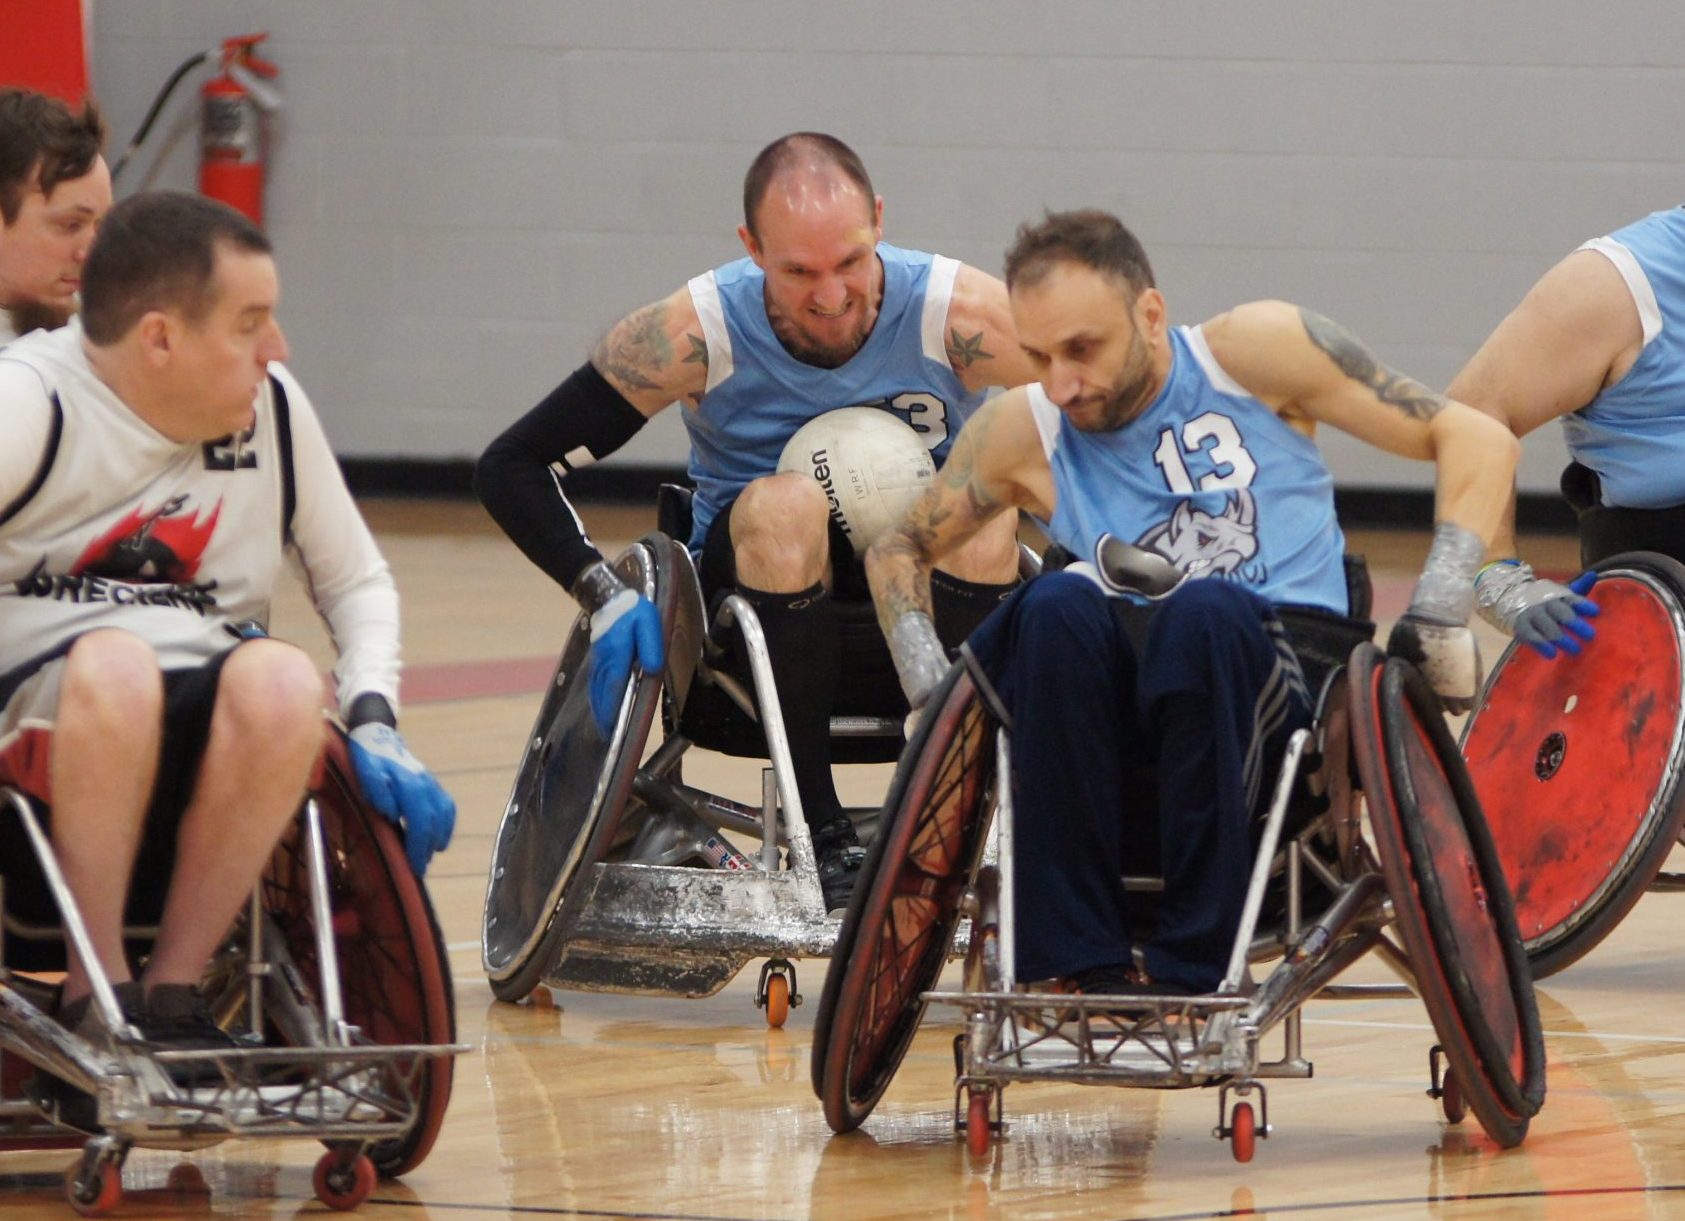 Adaptive Sports Ohio – A Chance to Play